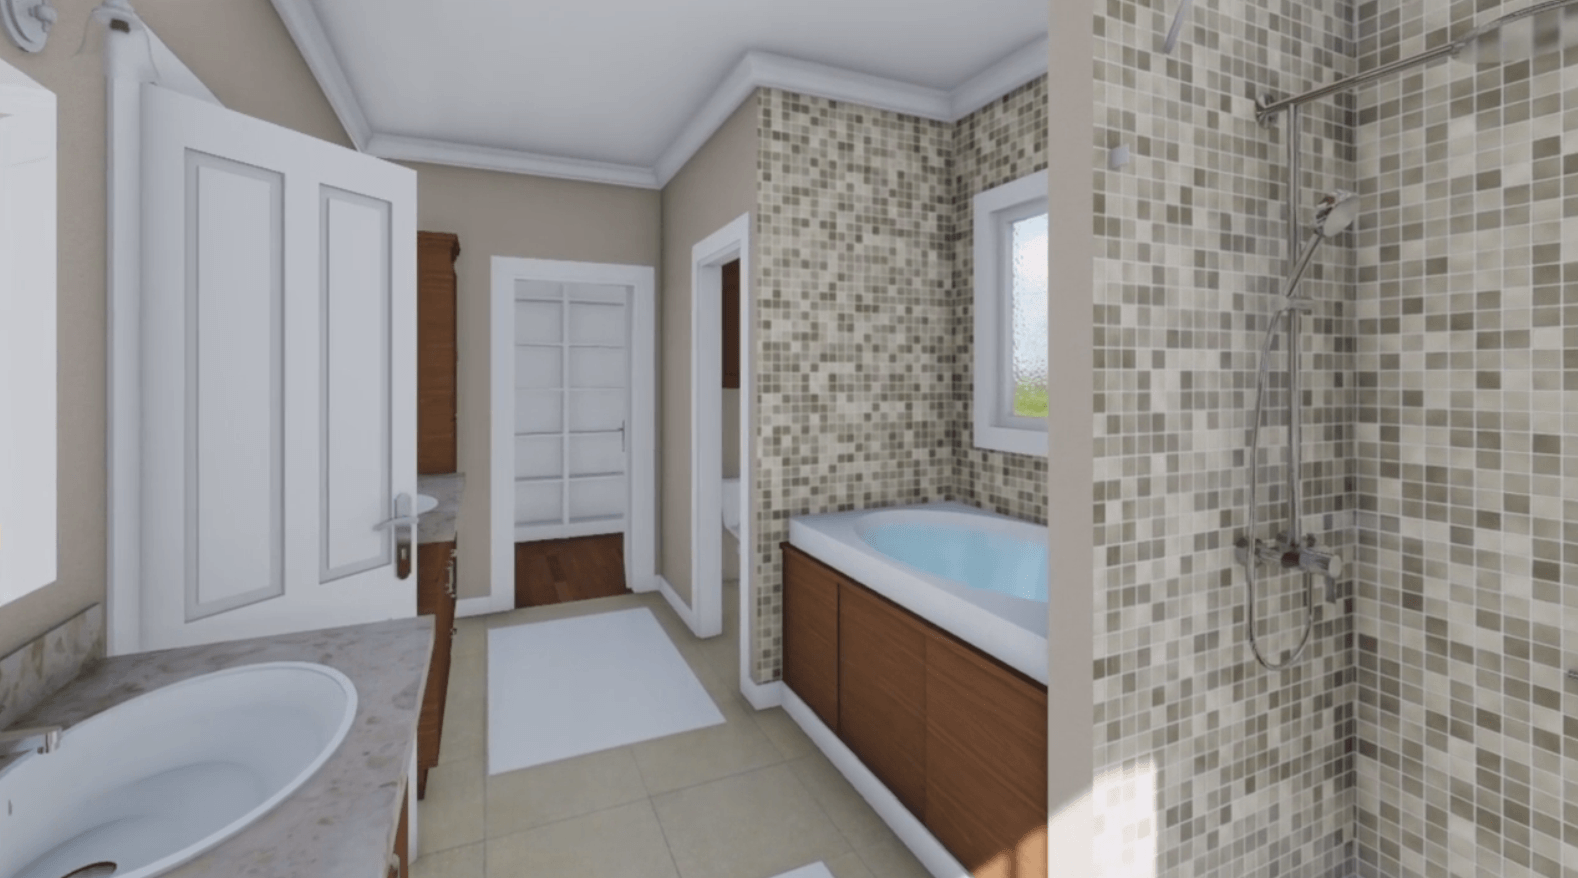 HPG-1888B-1 bathroom in home plans